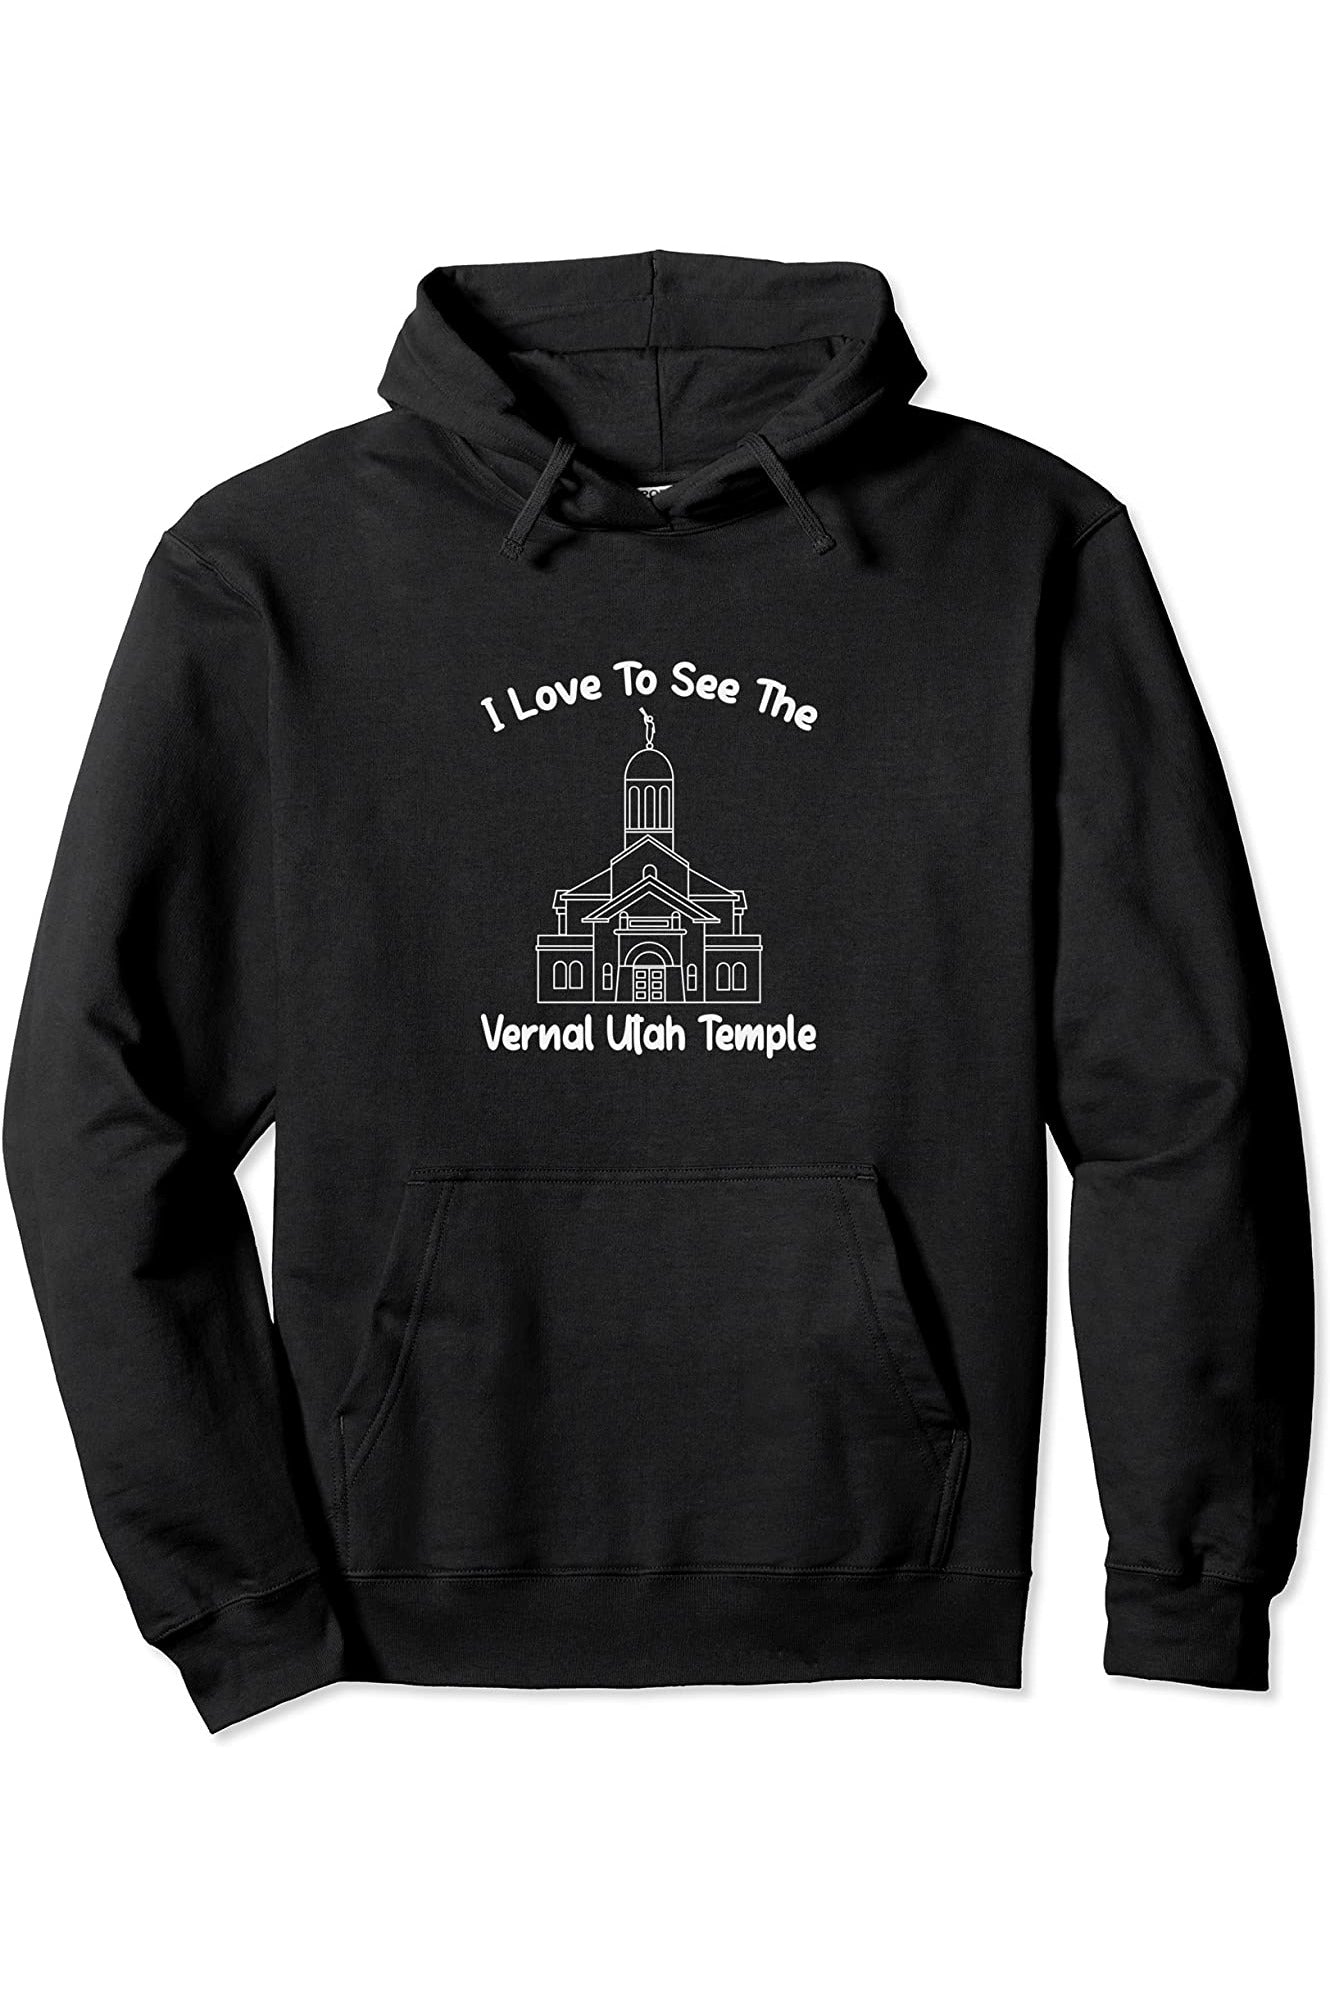 Vernal Utah Temple Pullover Hoodie - Primary Style (English) US